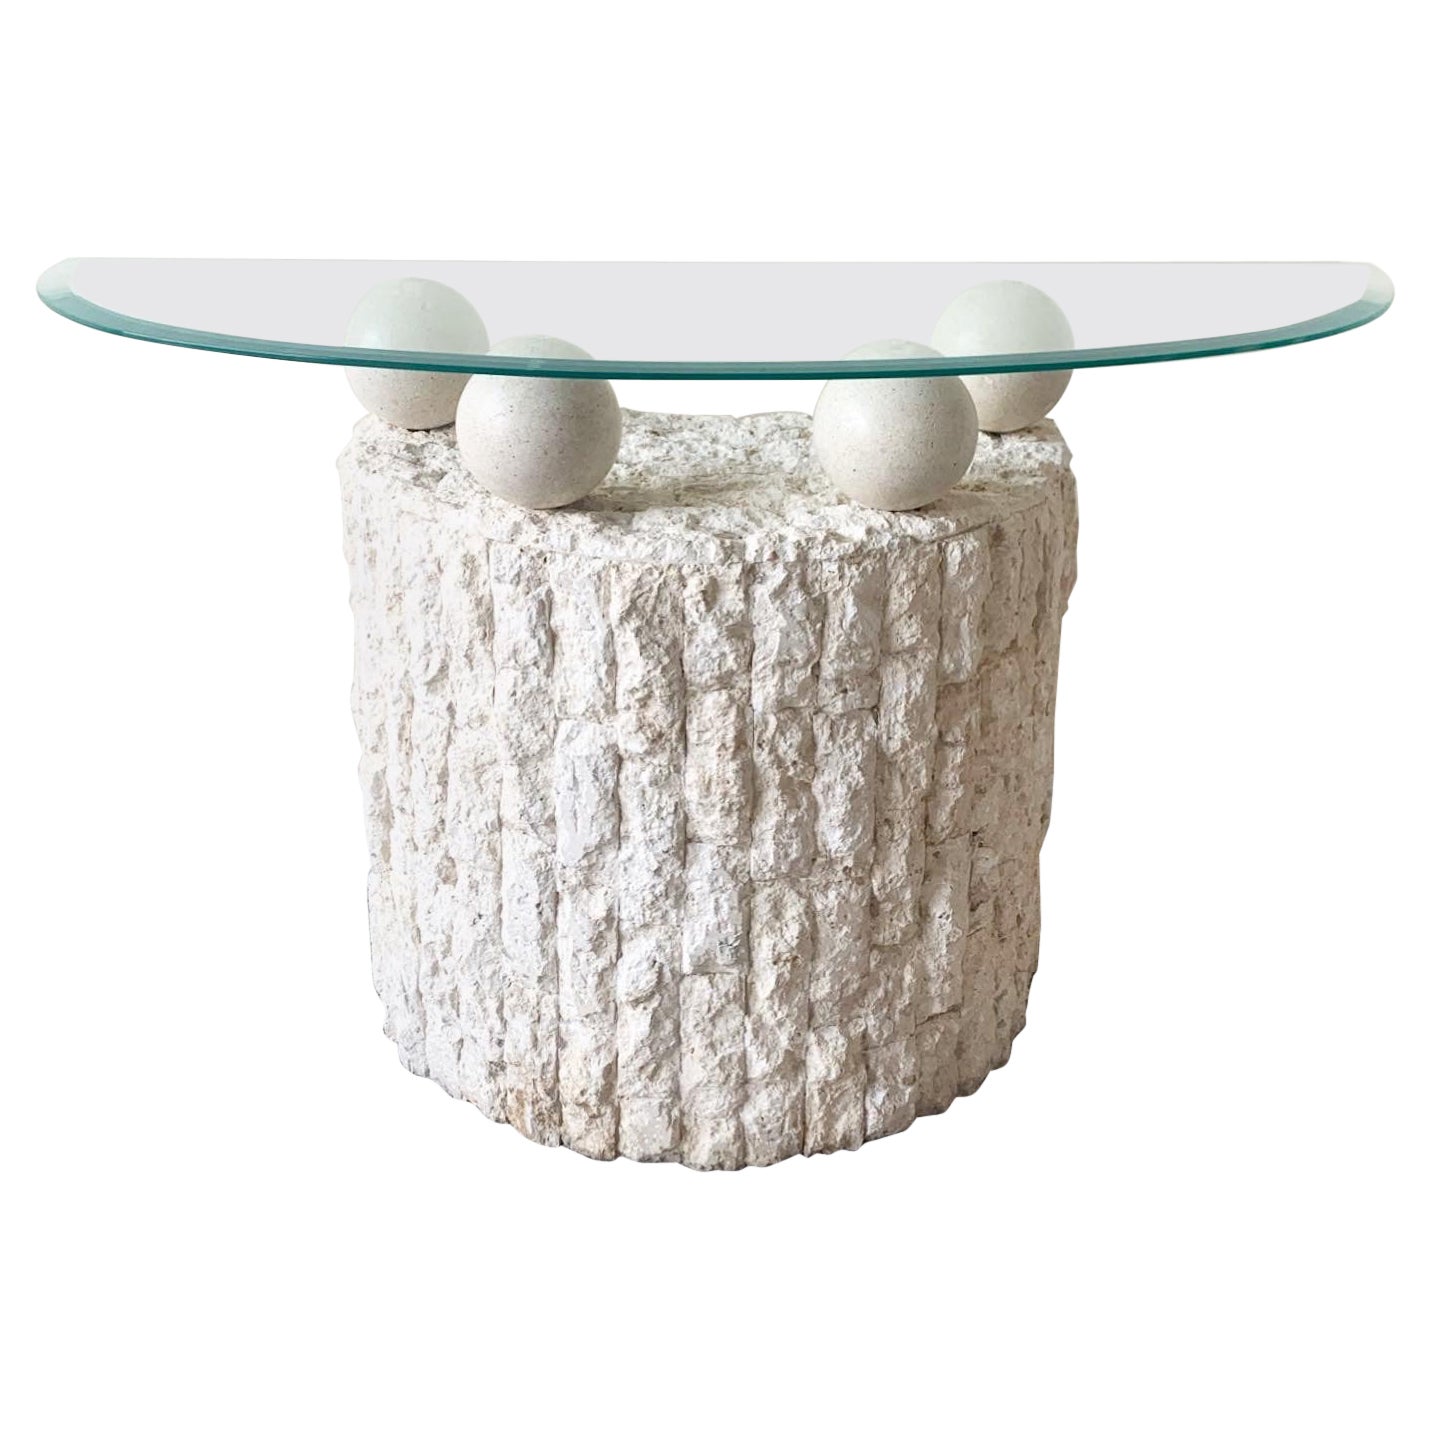 Table console postmoderne en pierre tessellée avec plateau en verre en vente